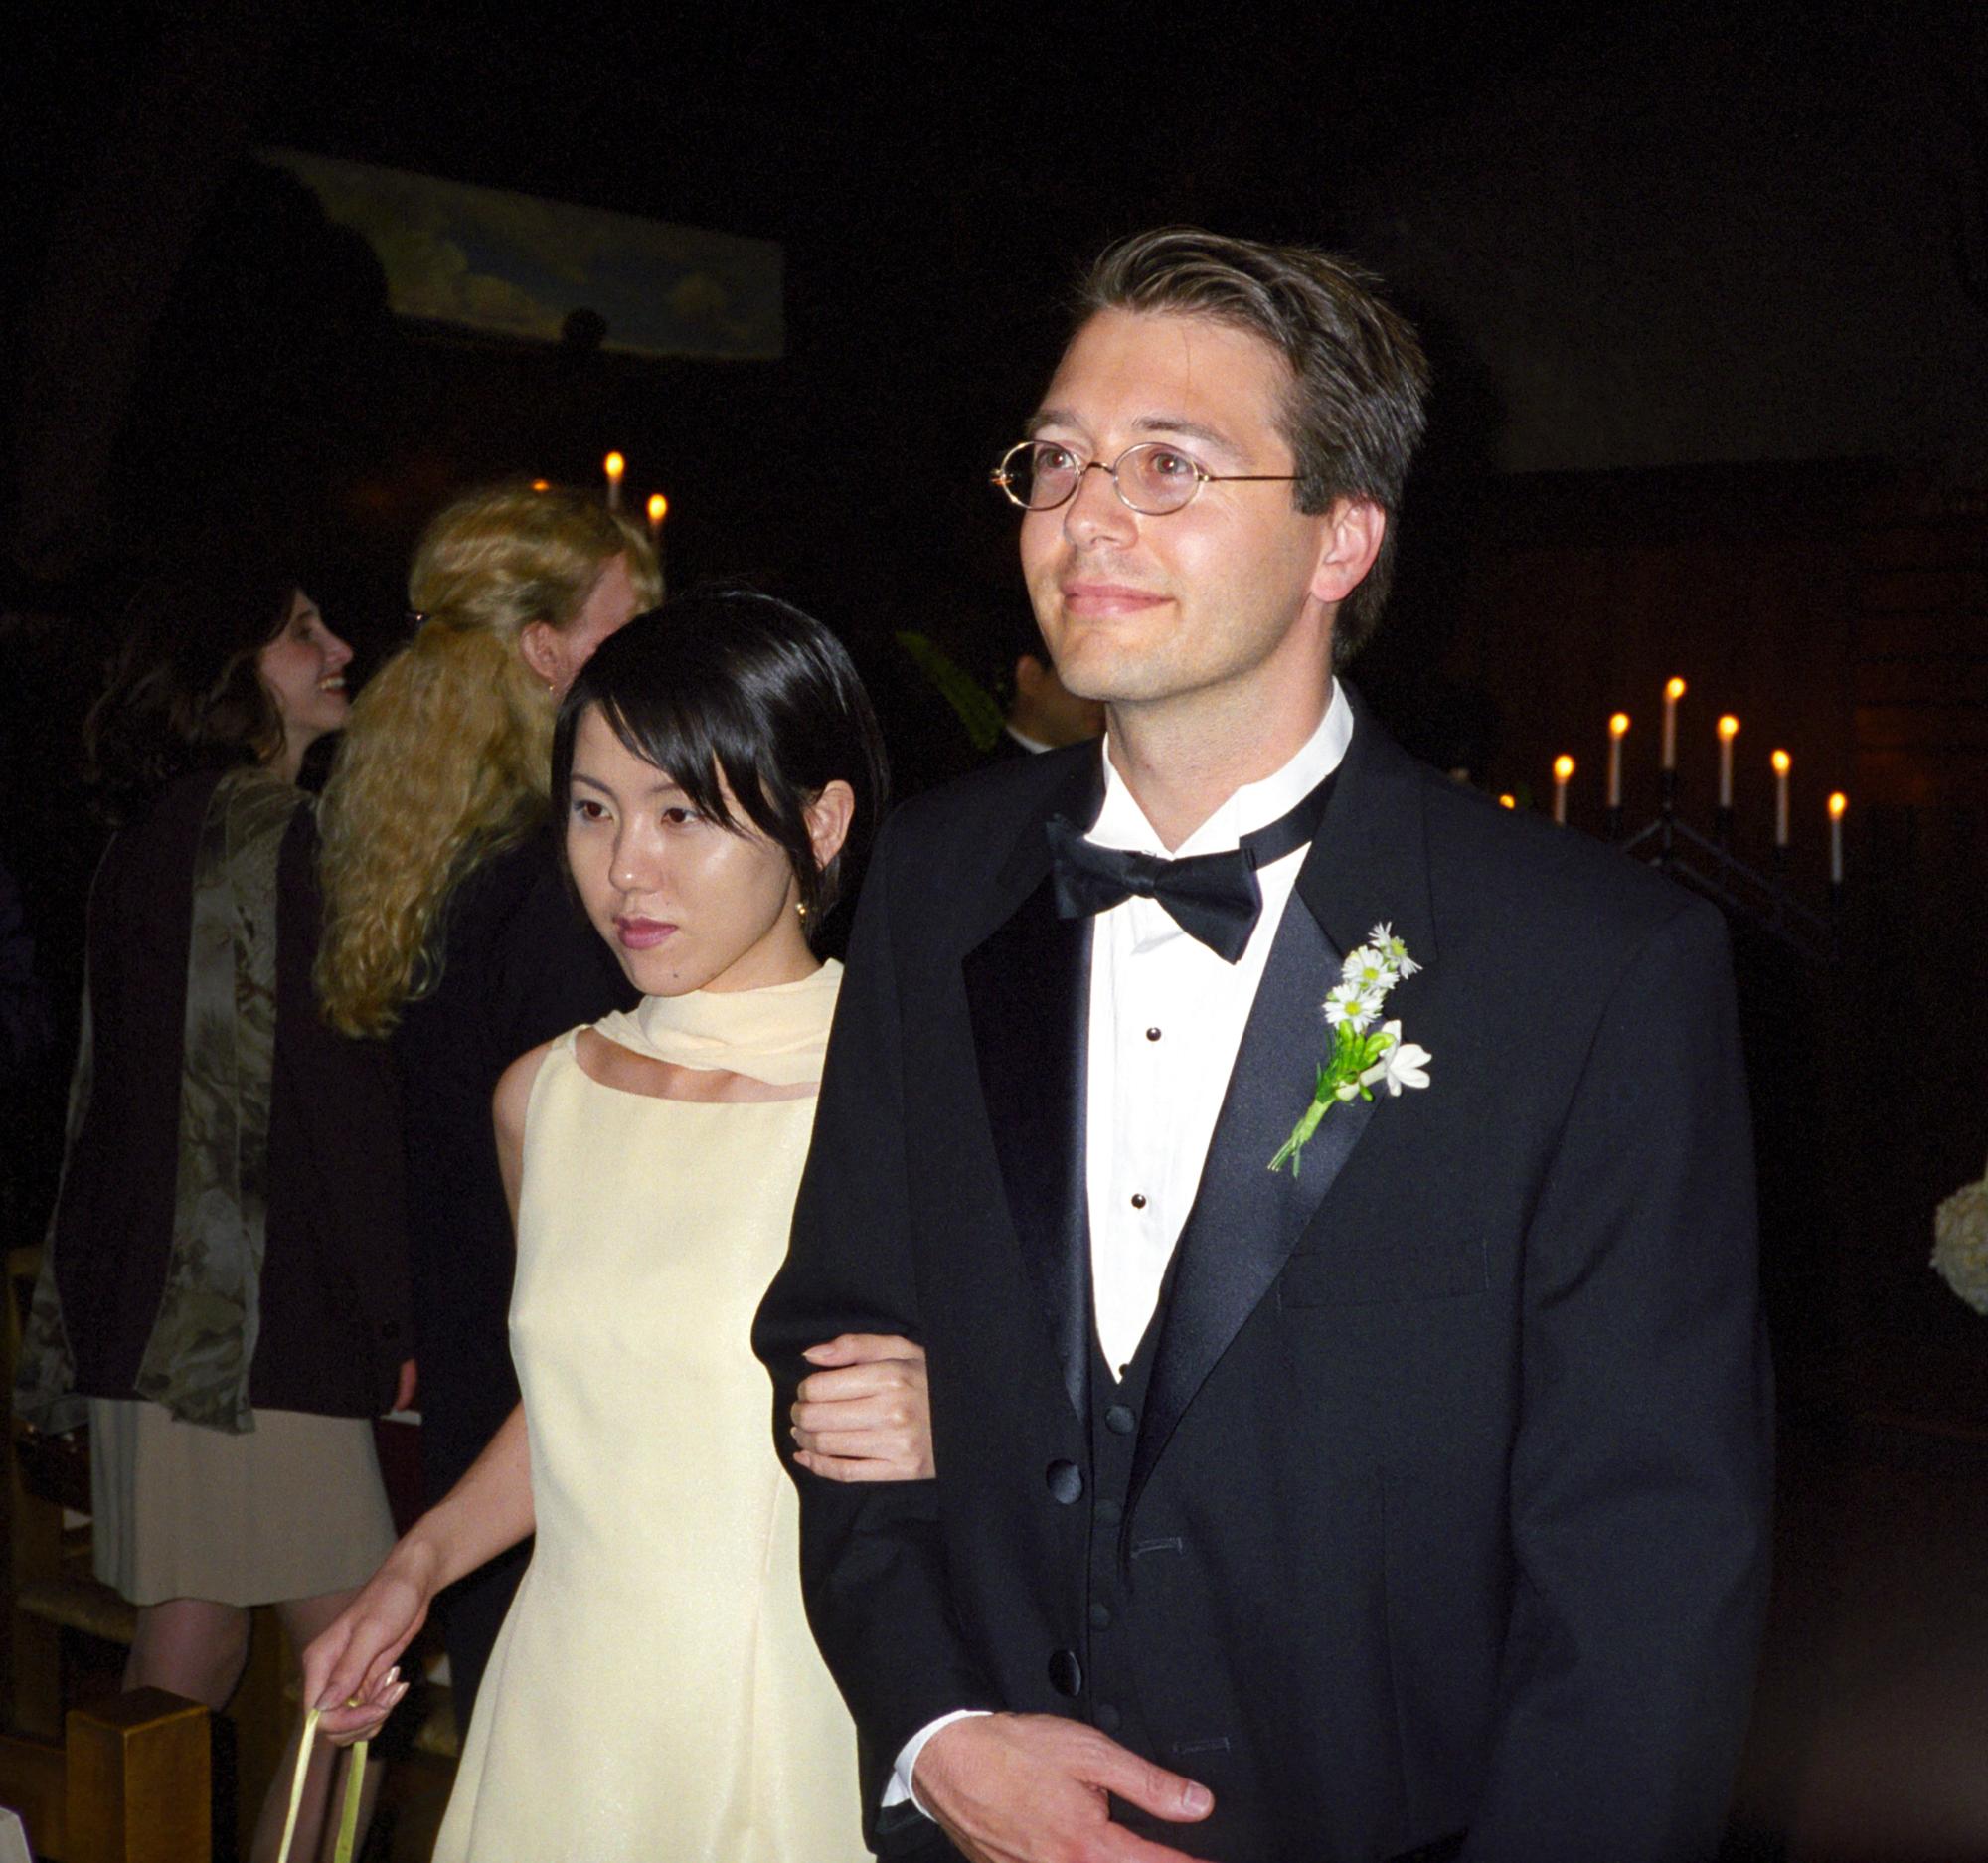 David & Ritsuko - Duimich Wedding #07